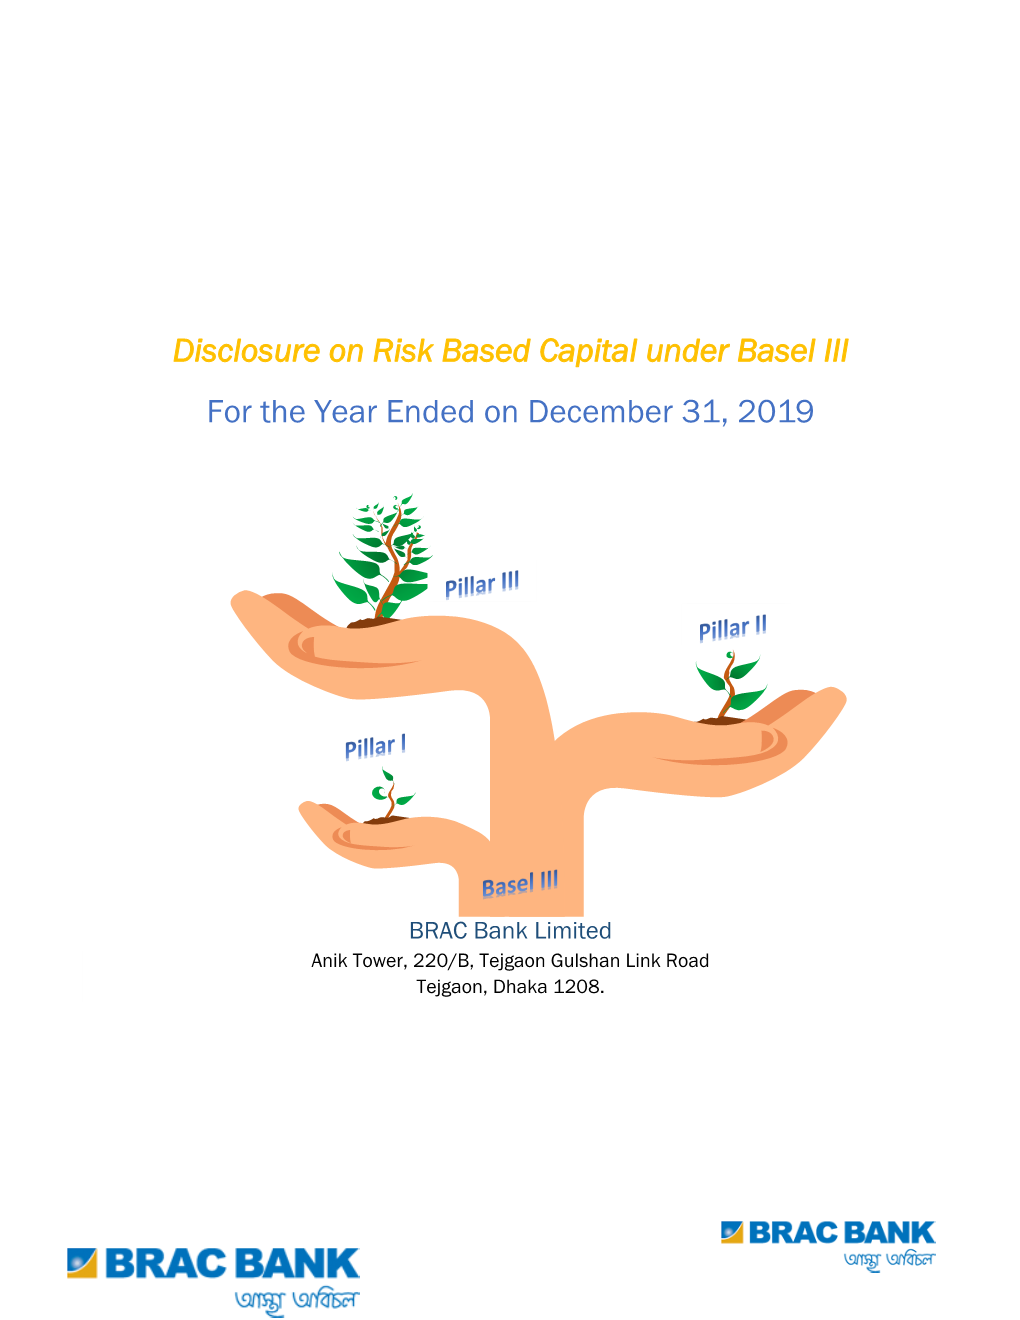 Disclosure on Risk Based Capital Adequacy (Basel III)—BRAC Bank Limited. - 2019